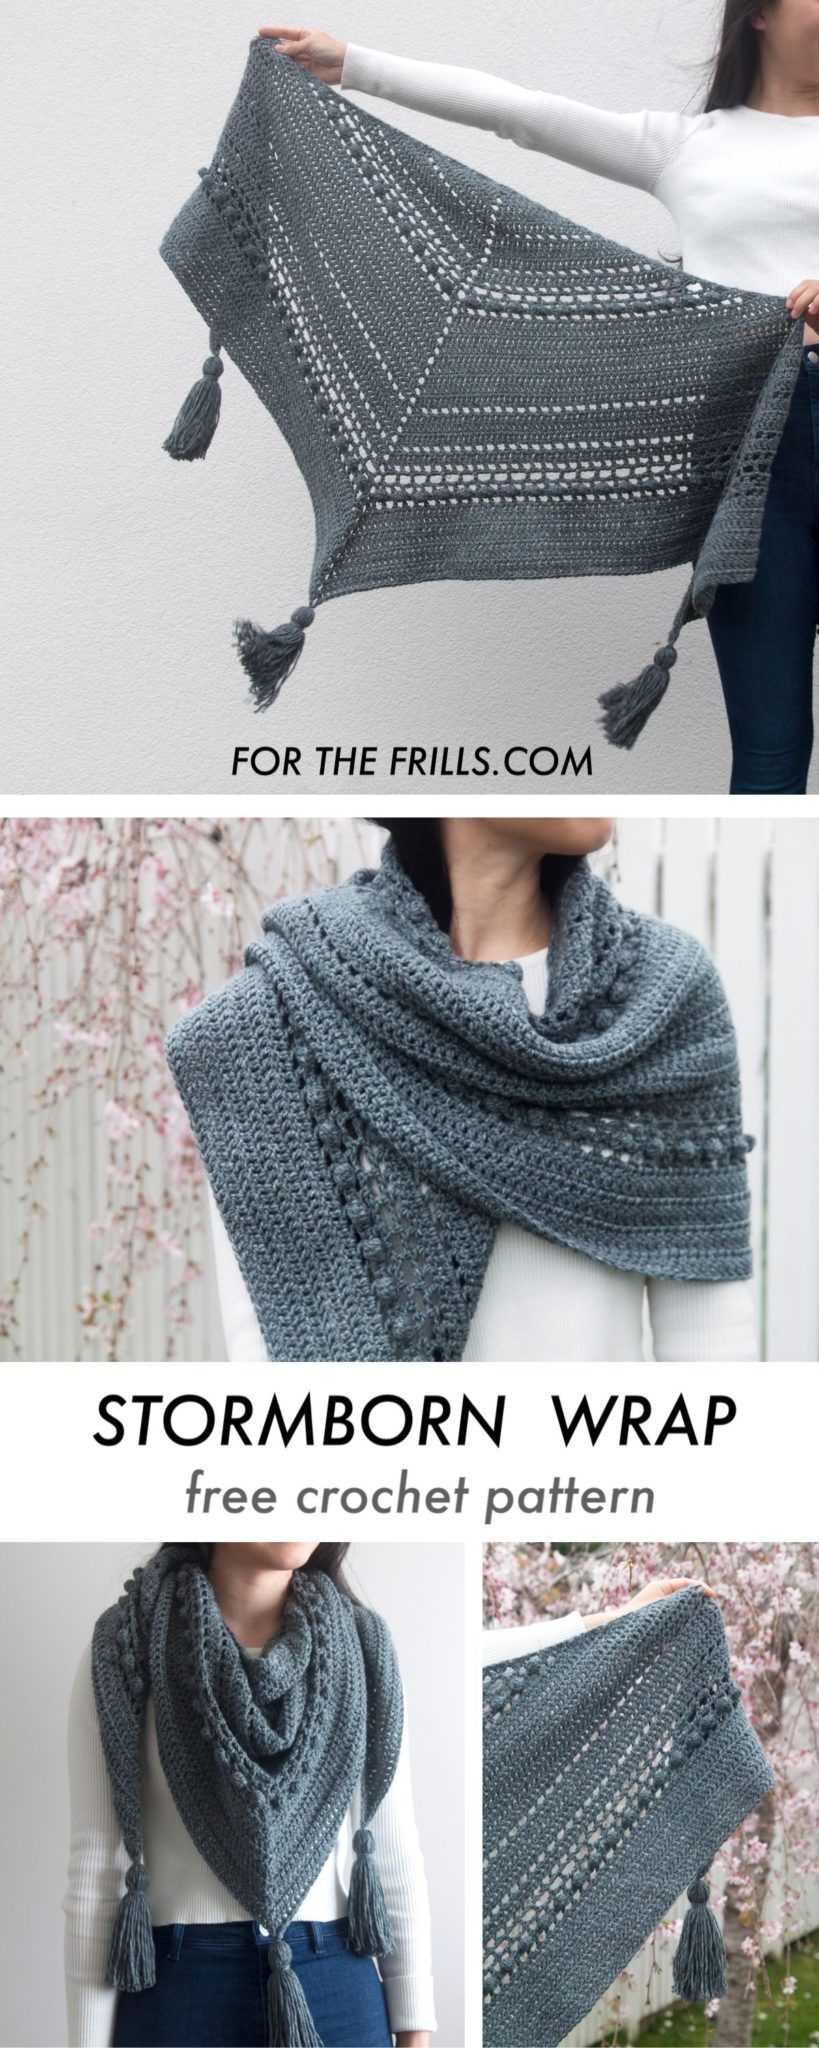 Crochet Stormborn Wrap - free crochet pattern - for the frills